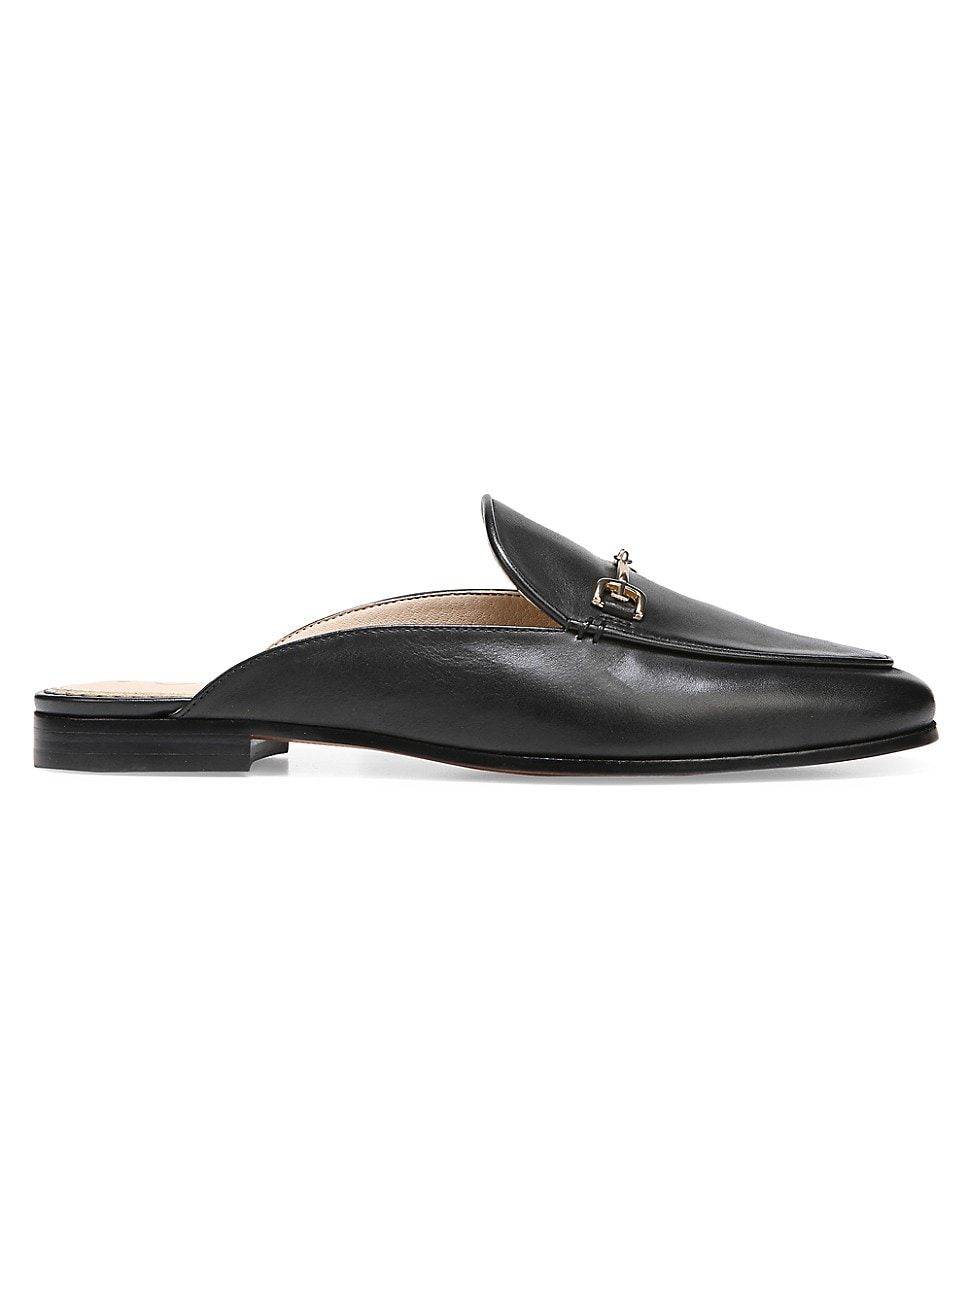 Sam Edelman Women's Linnie Leather Loafer Mules - Black - Size 10.5 | Saks Fifth Avenue